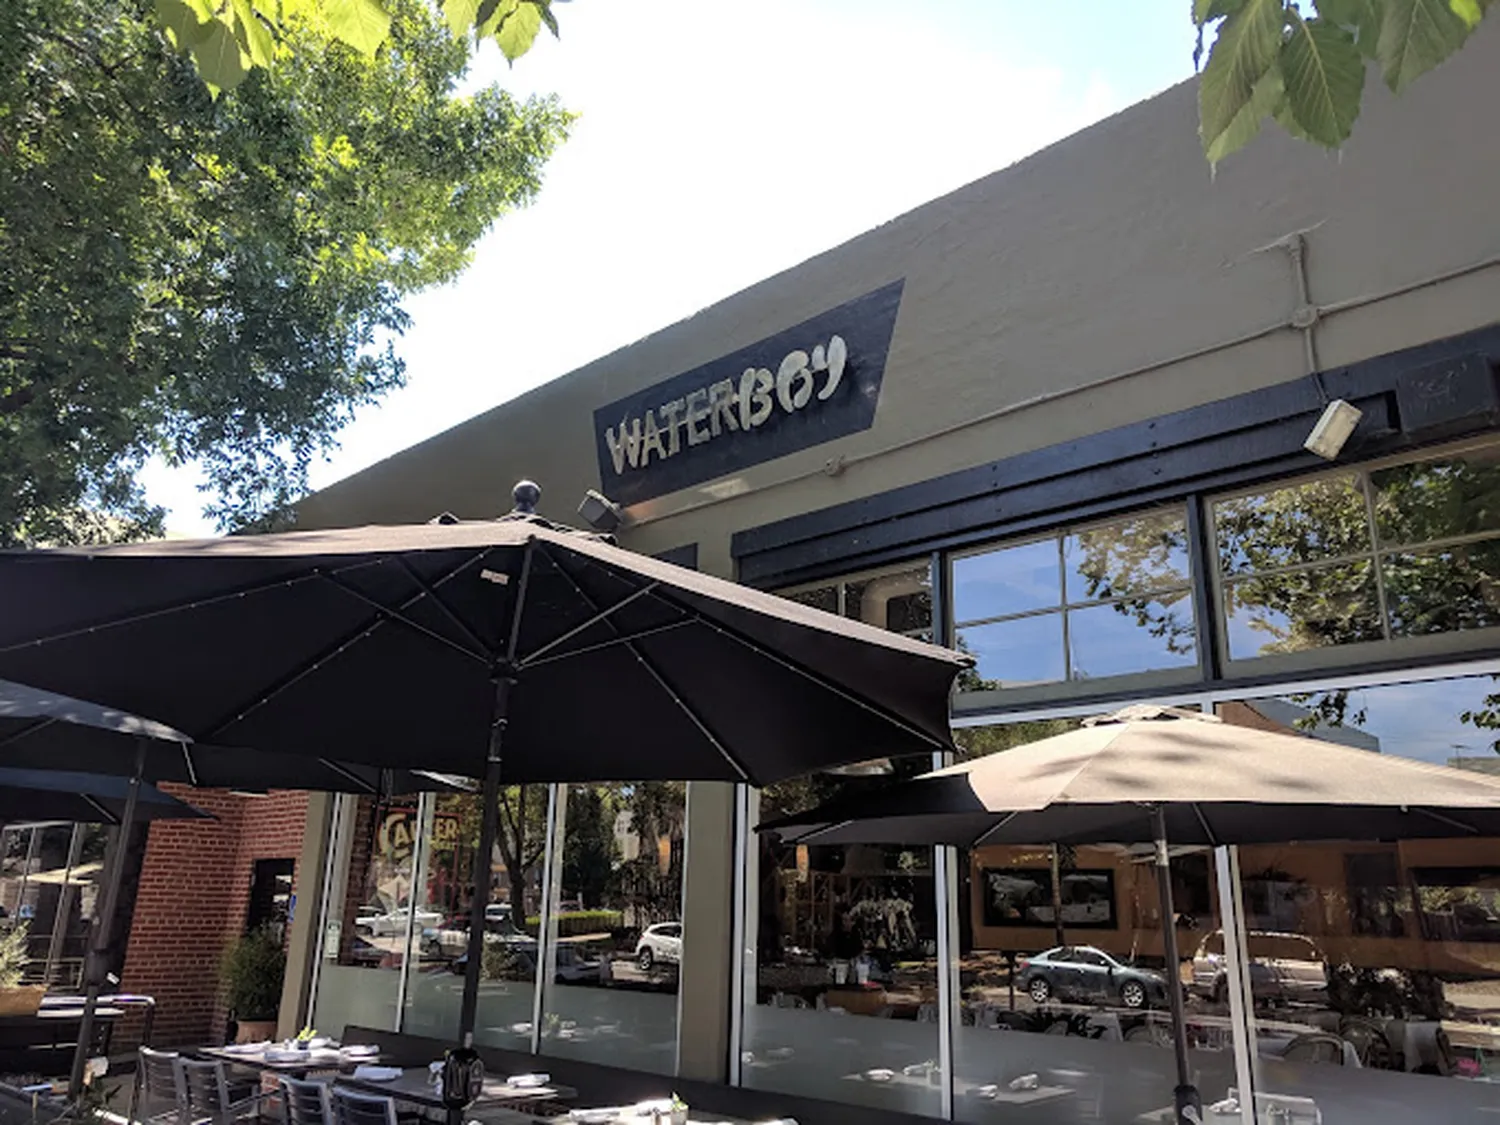 The waterboy restaurant Sacramento